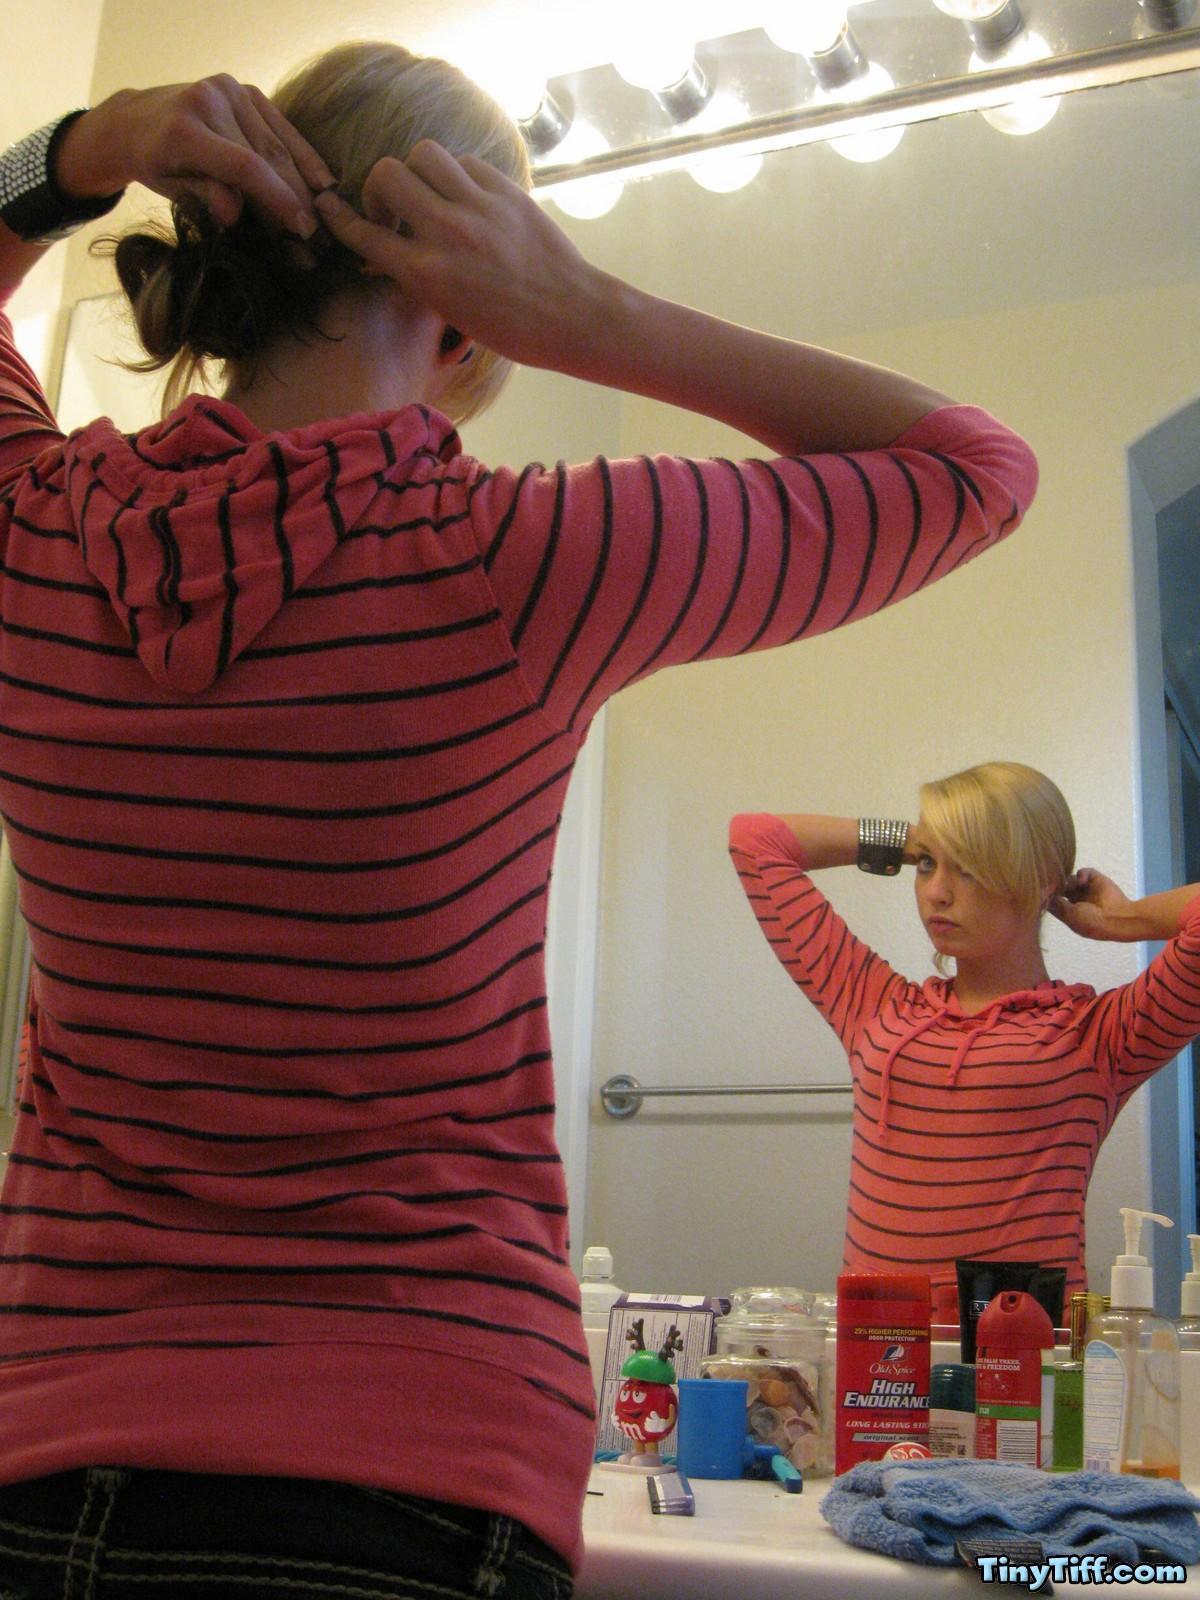 A behind-the-scenes peek at Tiff doing her hair #58923276